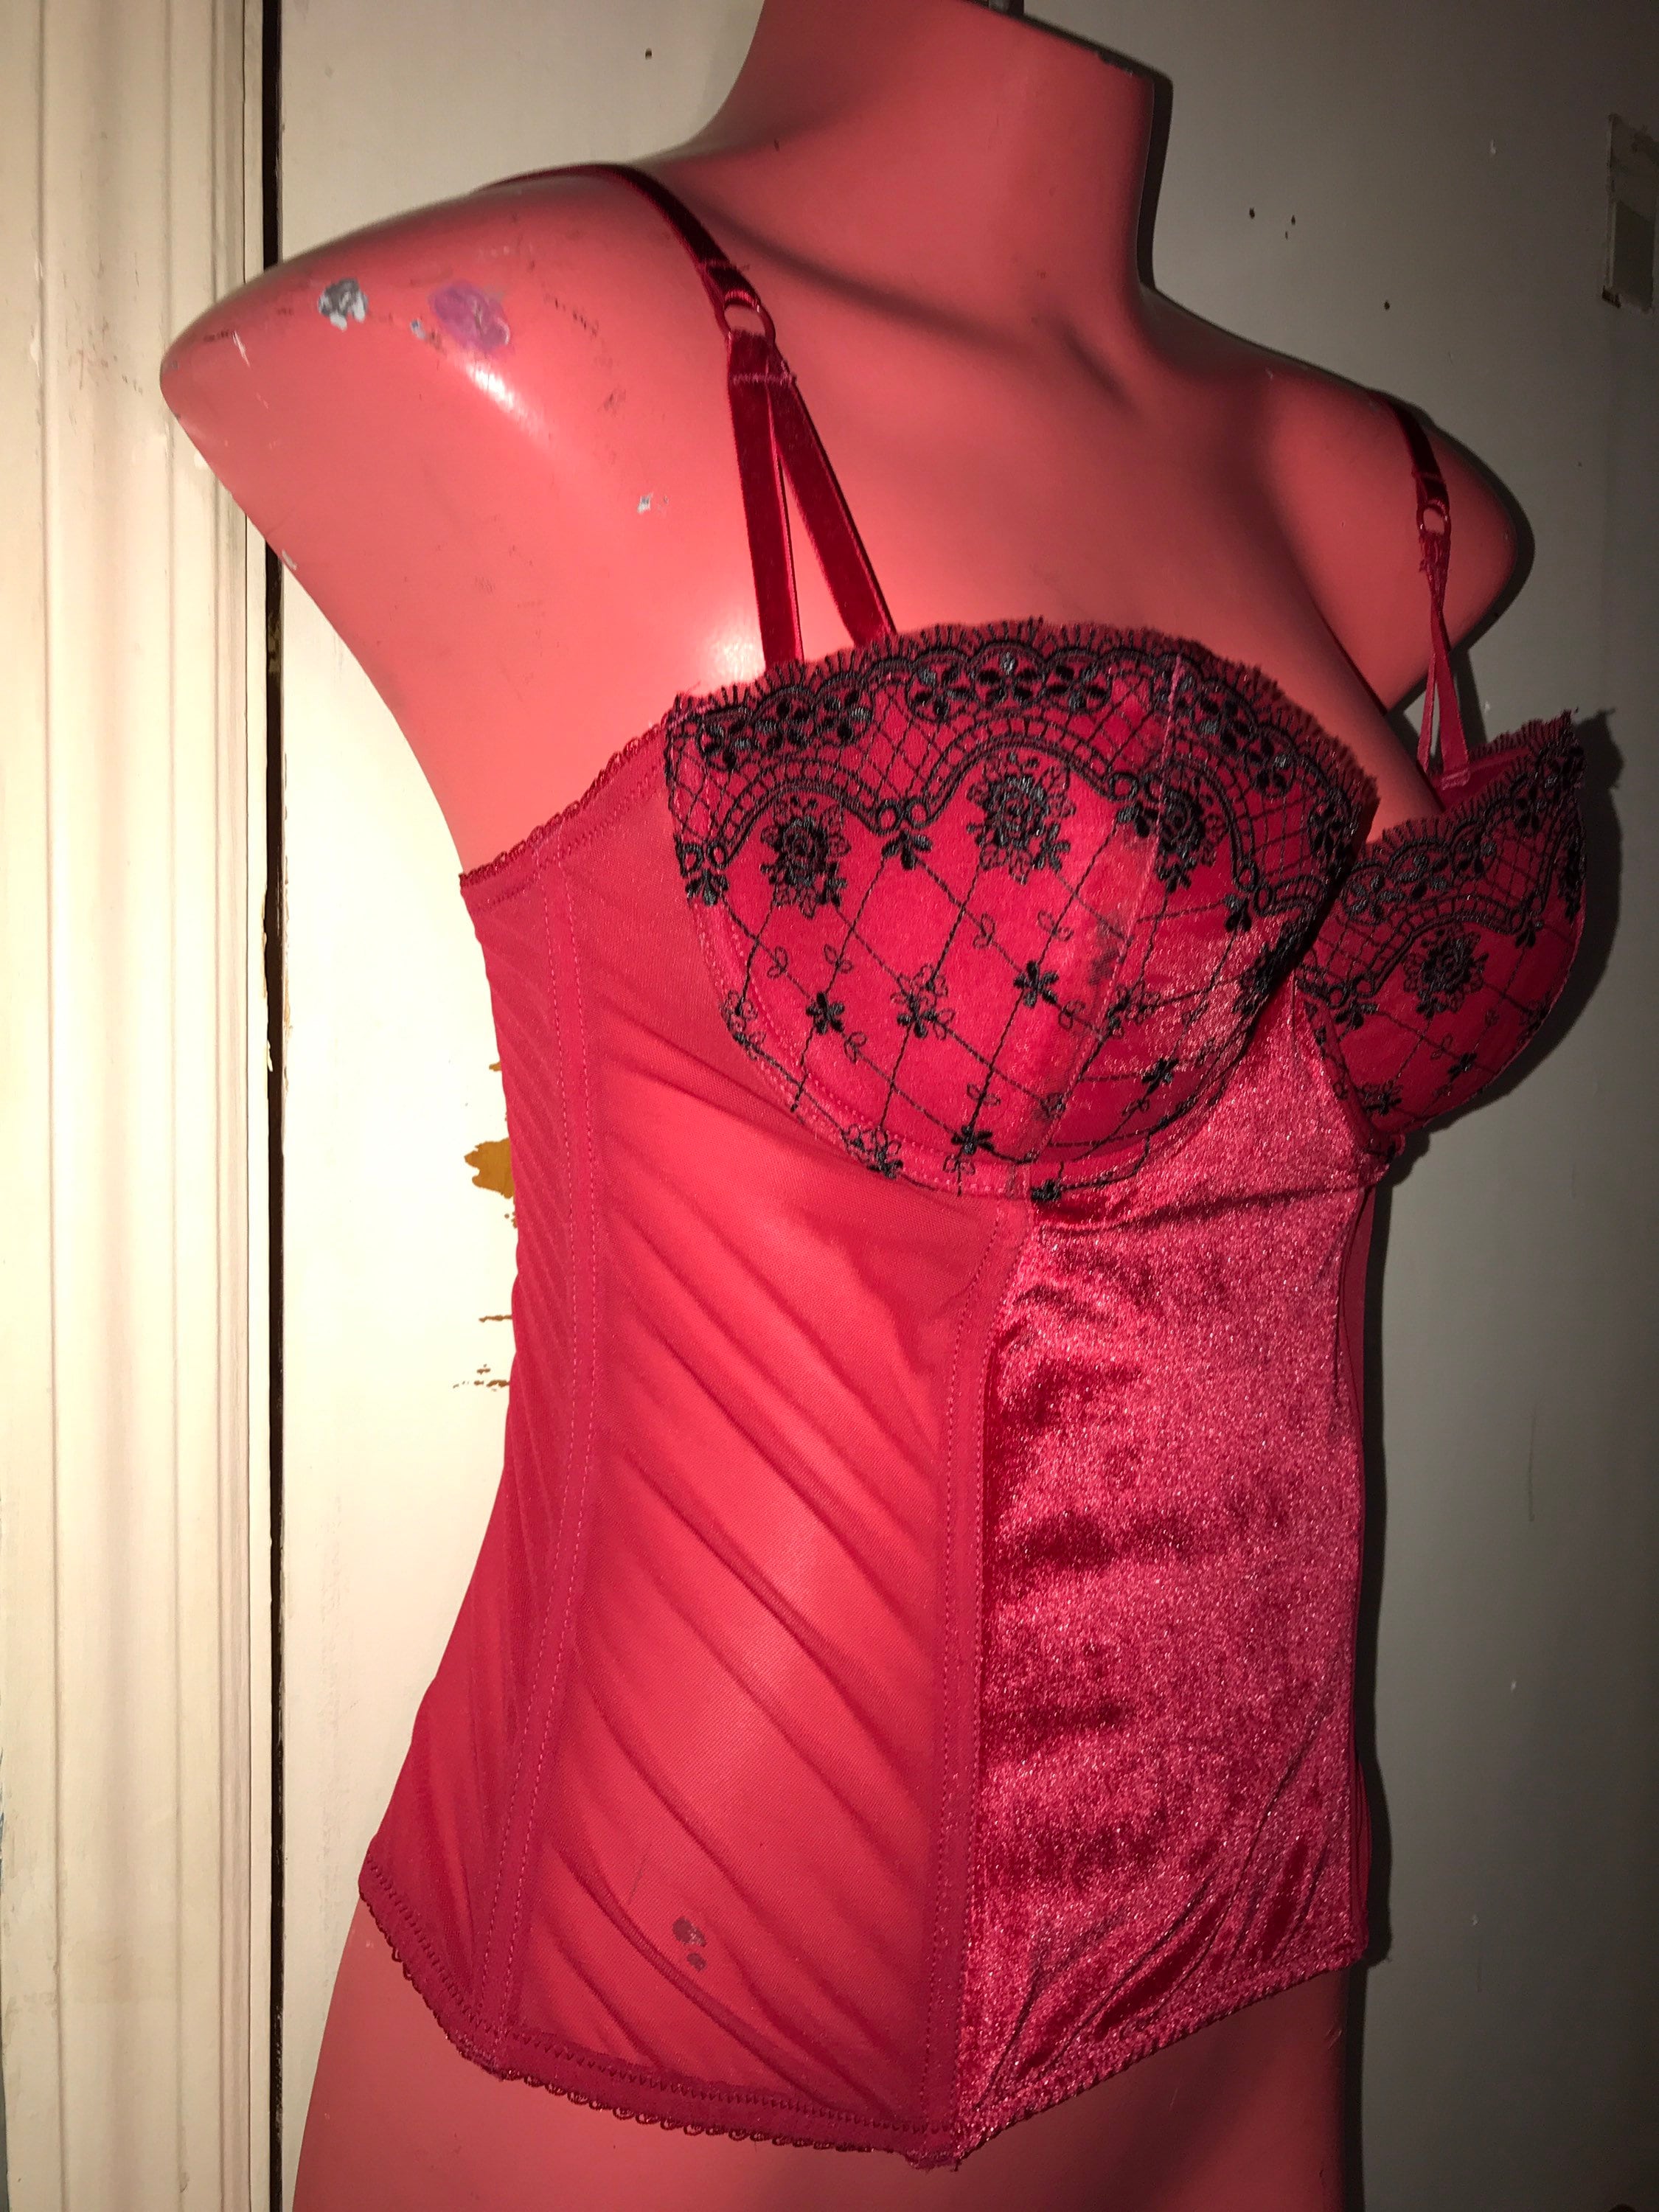 victoria's secret red corset